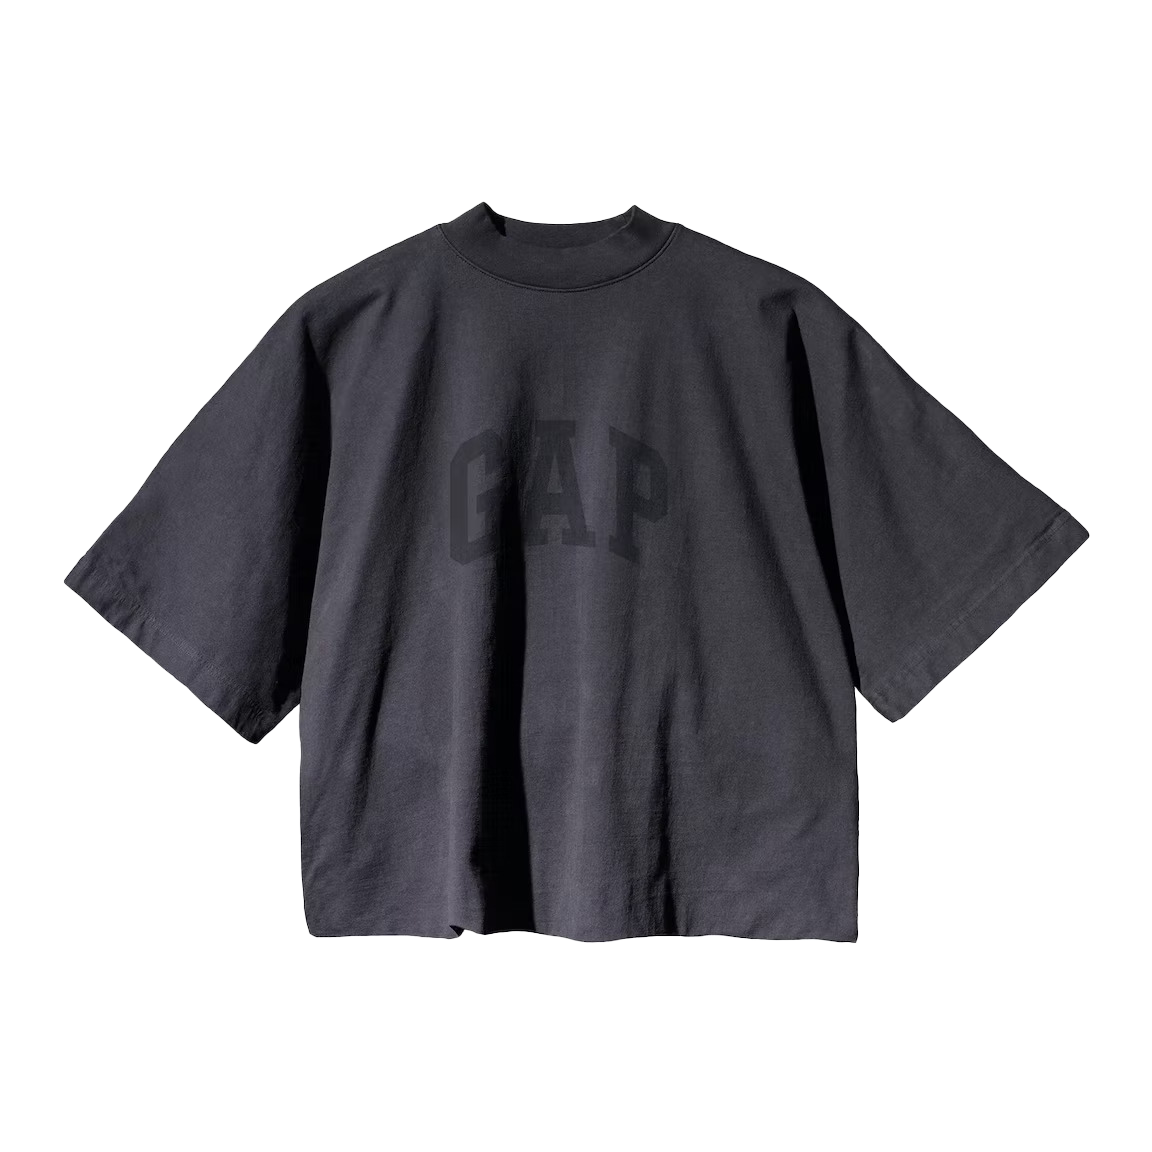 GAP x YZY - Camiseta Engineered by Balenciaga Dove no Seam